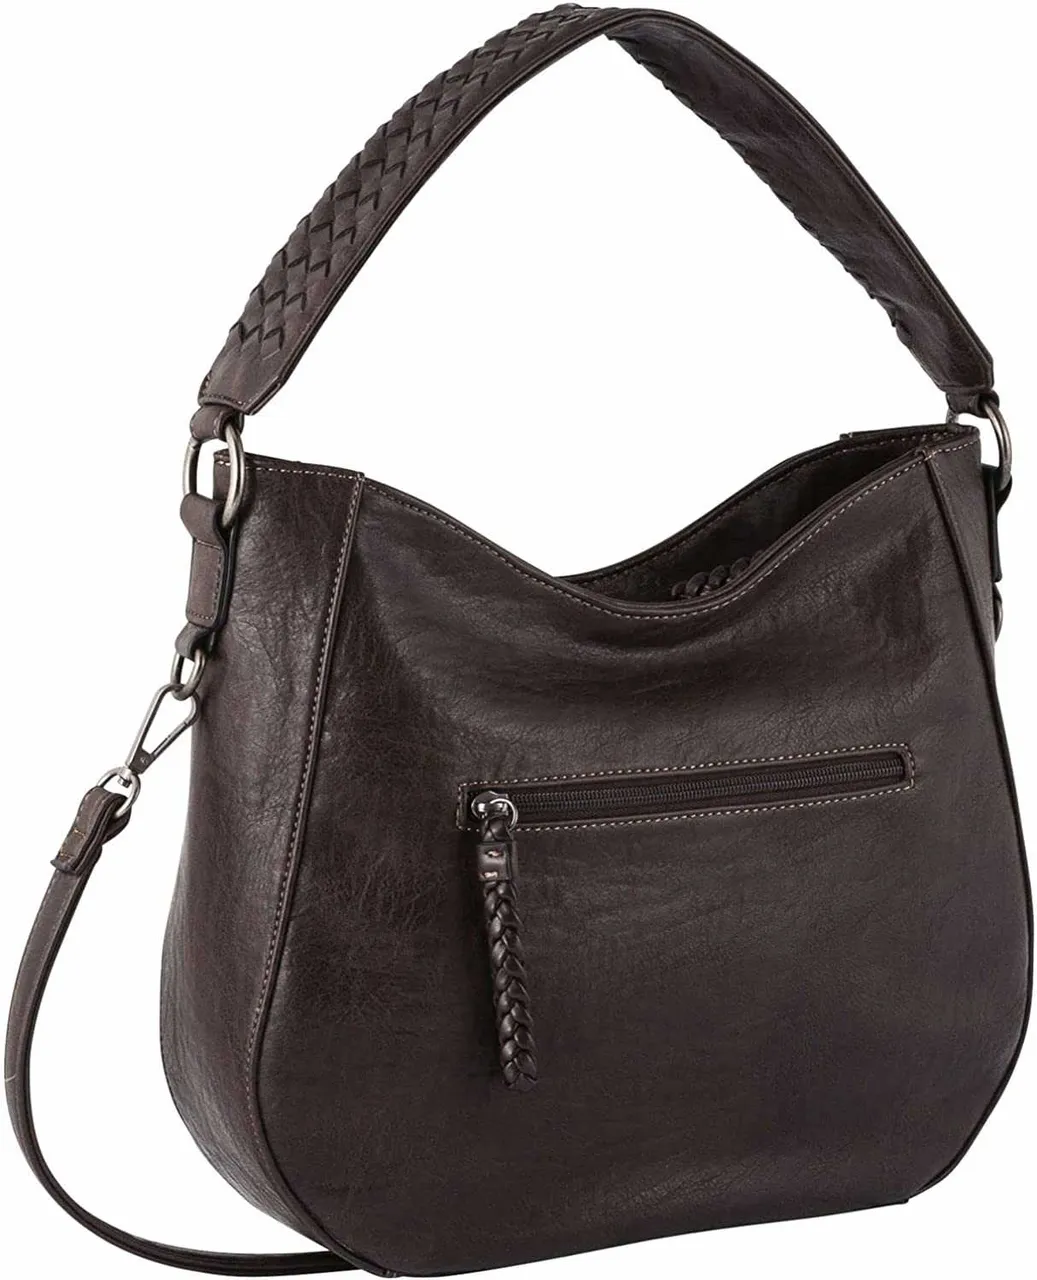 Handtaschen braun AYLA, Hobo bag, dark brown -